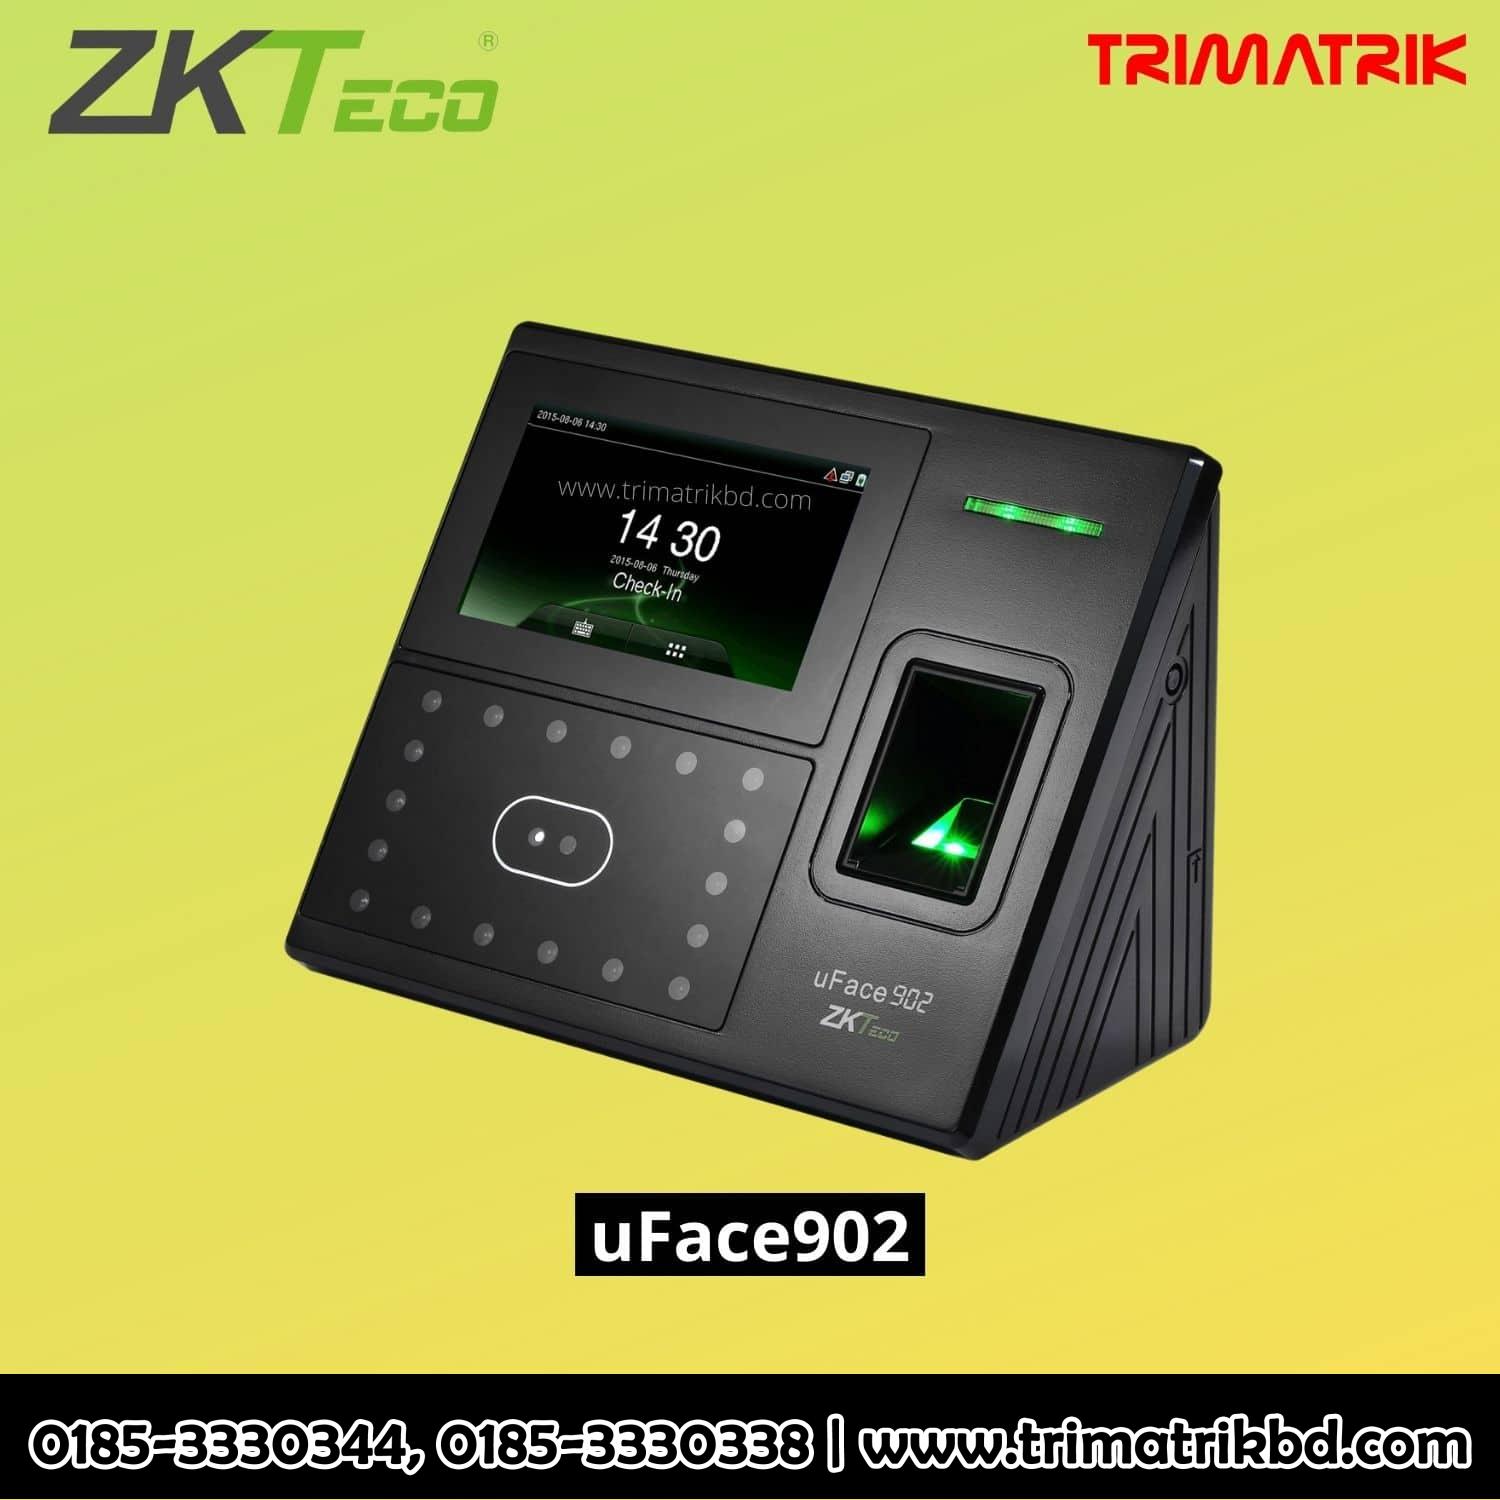 ZKTeco uFace902 Price in Bangladesh